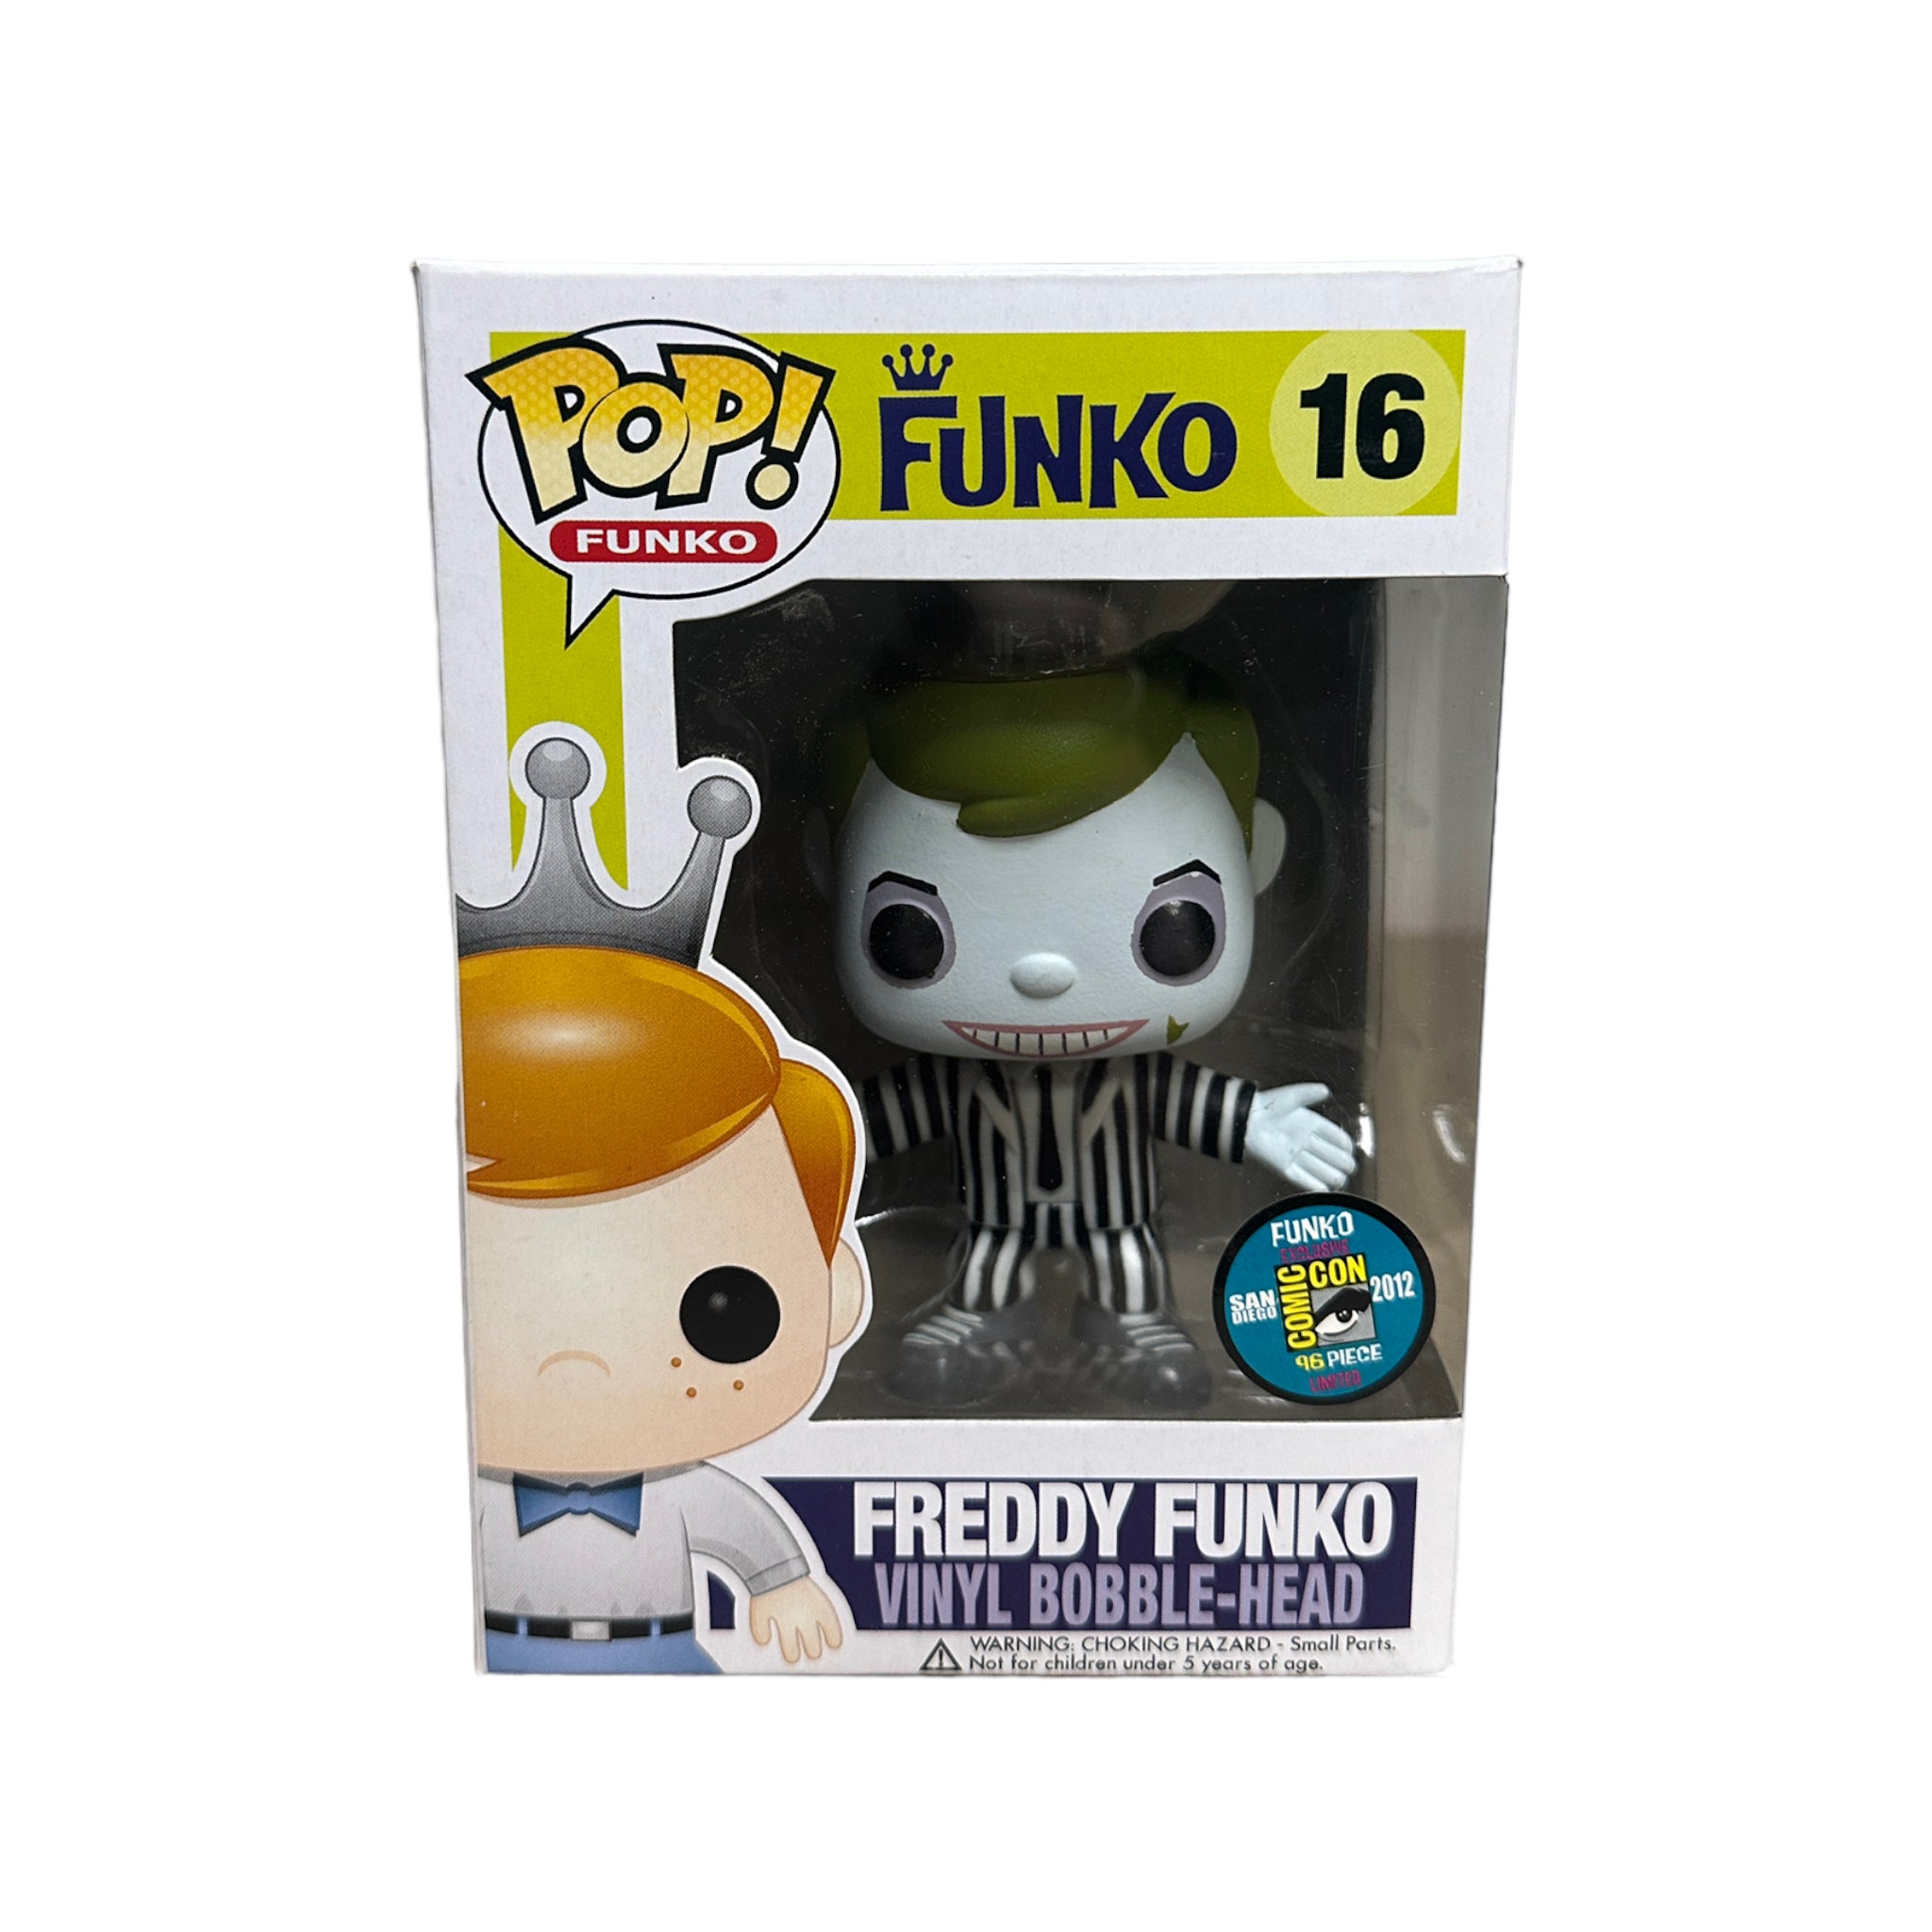 Freddy Funko as Beetlejuice #16 Funko Pop! - SDCC 2012 Exclusive LE96 Pcs - Condition 8.75/10